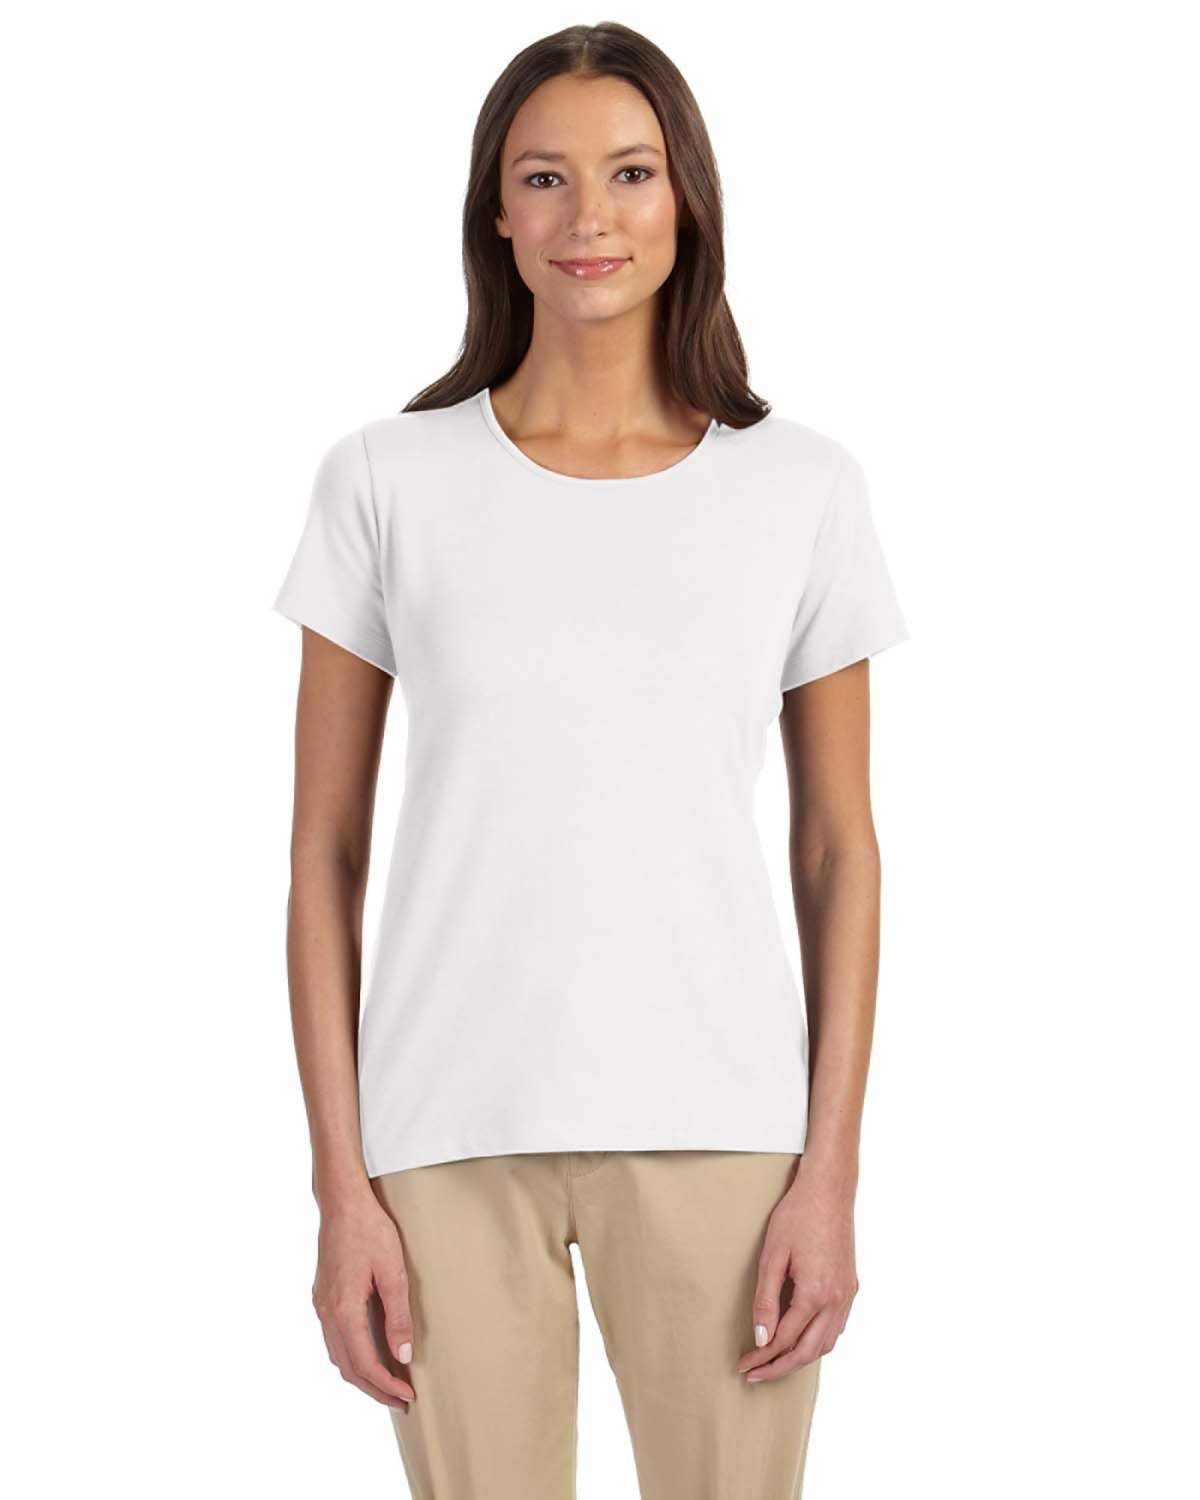 Effortless Sophistication: Devon & Jones Ladies' Perfect Fitâ„¢ Shell T-Shirt